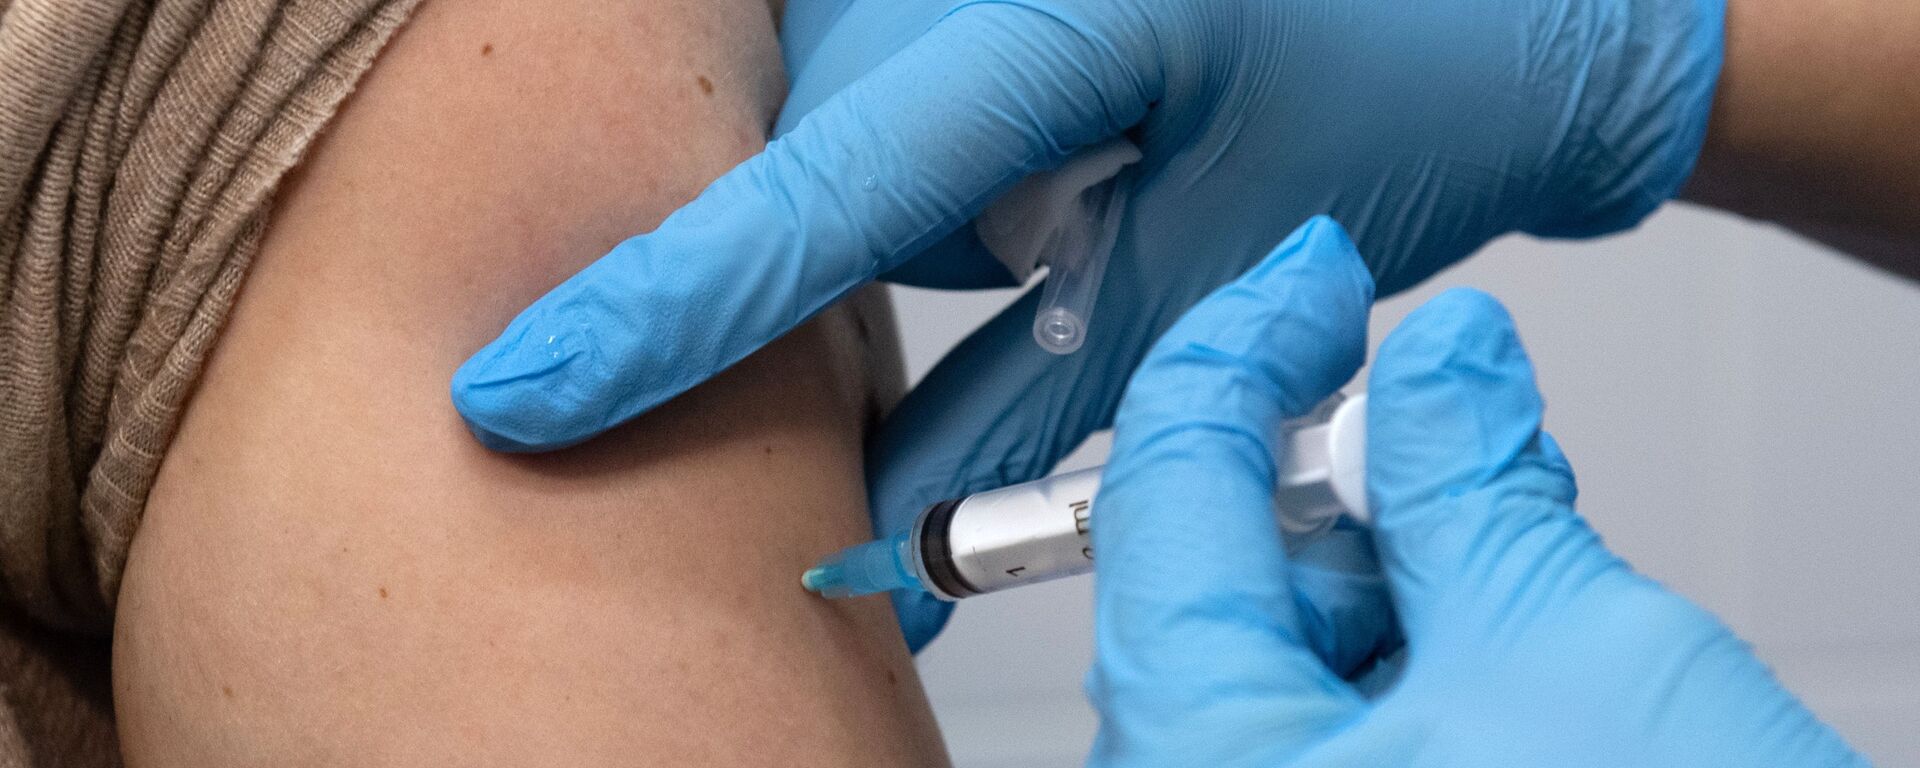 تطعيم أهالي موسكو بلقاح ضد فيروس كورونا (كوفيد - 19)، روسيا 5 ديسمبر 2020 - سبوتنيك عربي, 1920, 24.06.2021